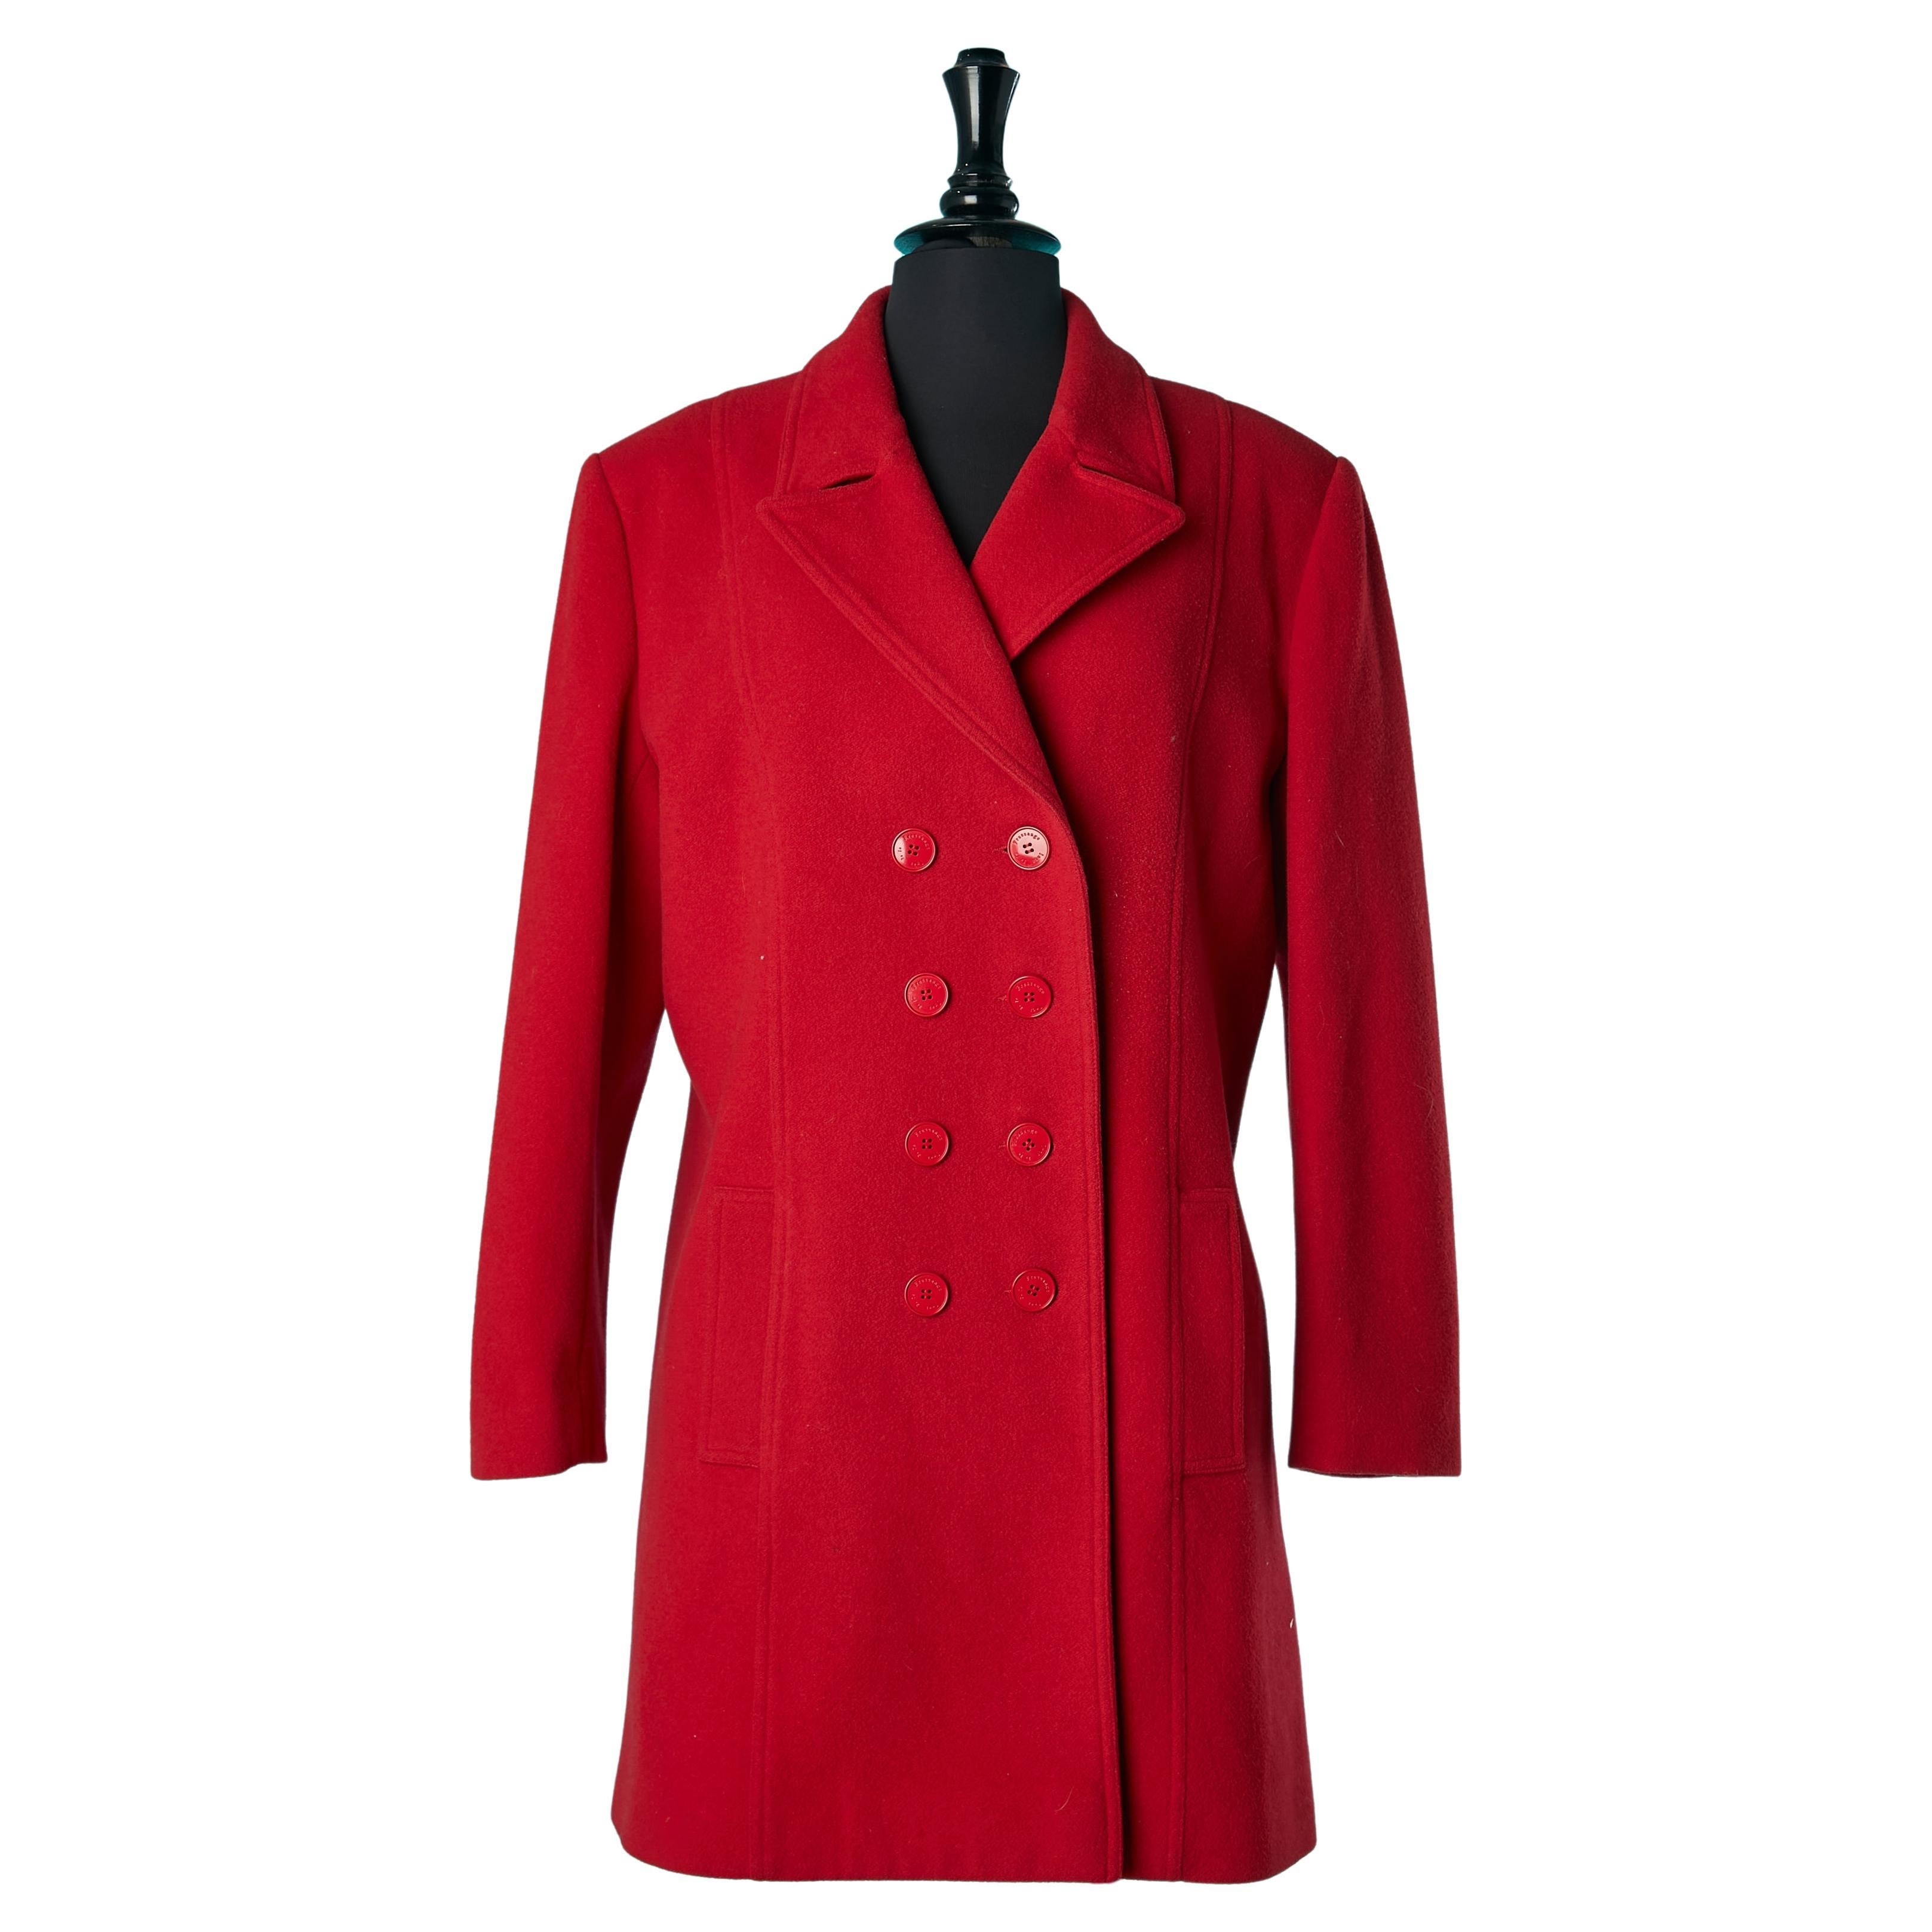 Red double-breasted coat in wool Ines de la Fressange  For Sale